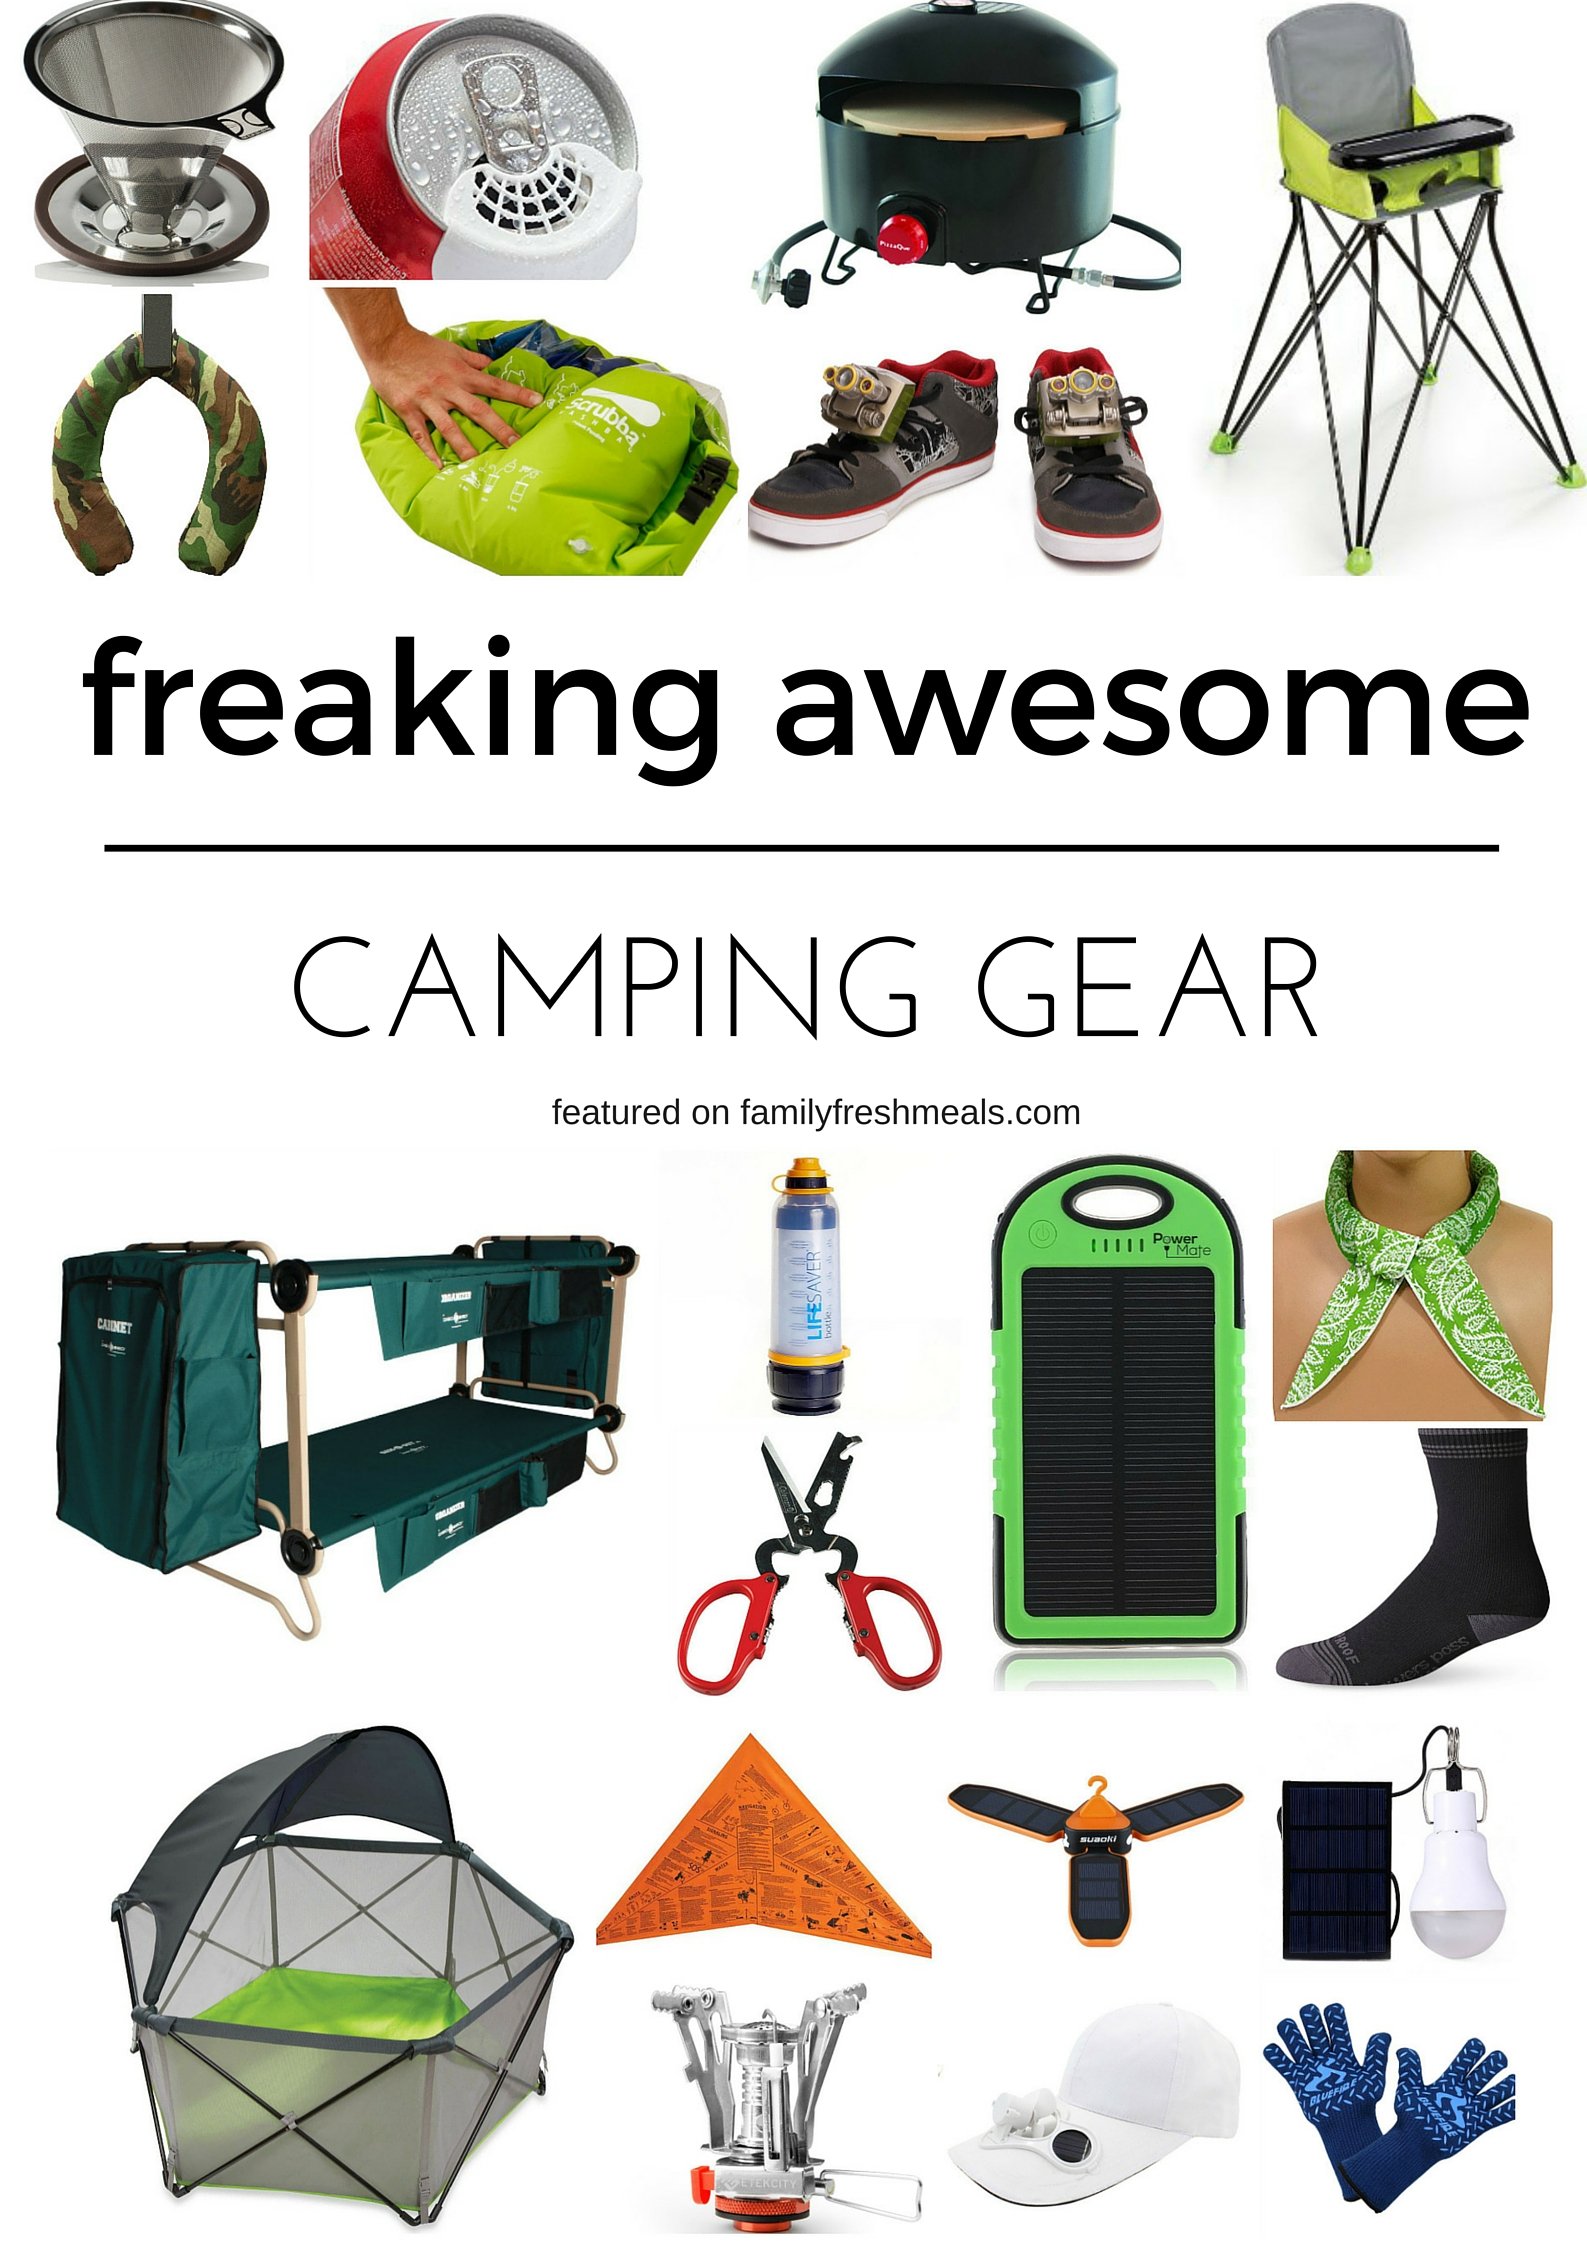 https://www.familyfreshmeals.com/wp-content/uploads/2016/06/freaking-awesome-camping-gear.jpg